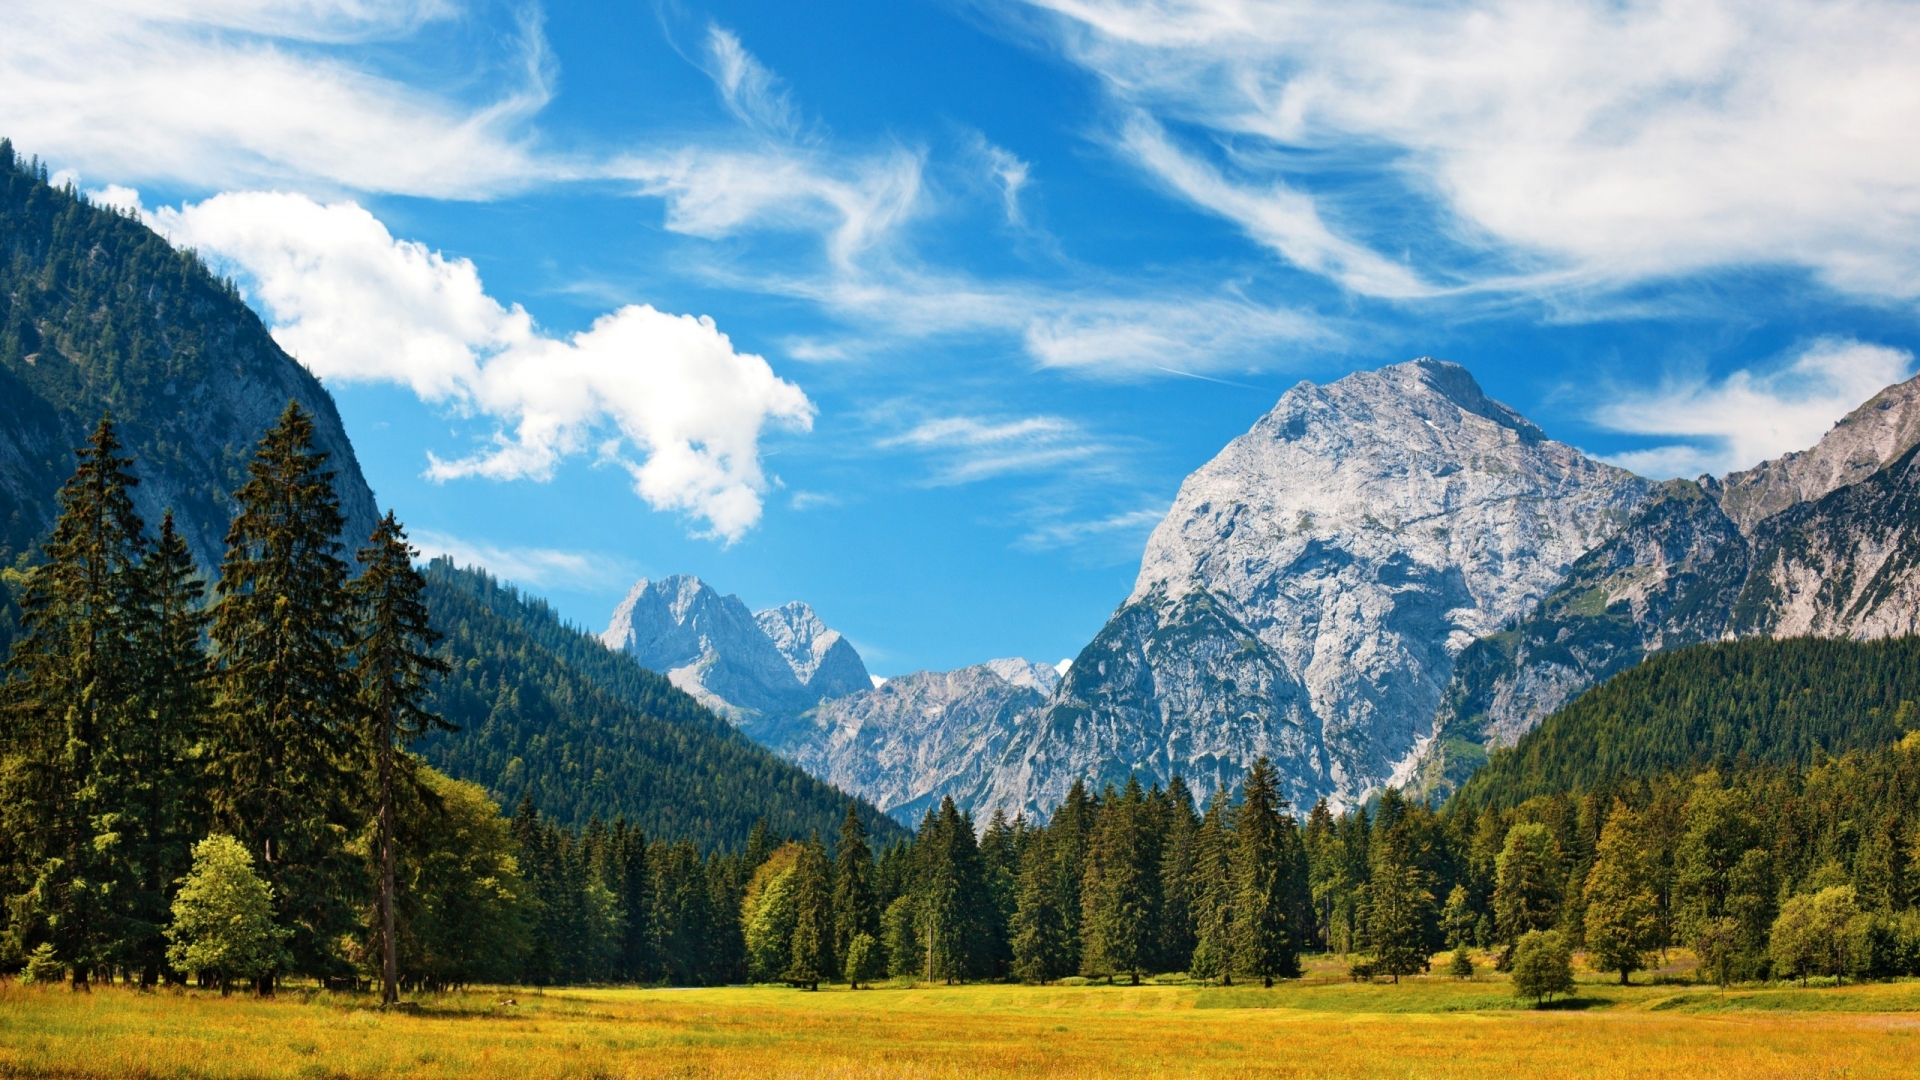 Stunning Mountain Landscape for 1920 x 1080 HDTV 1080p resolution